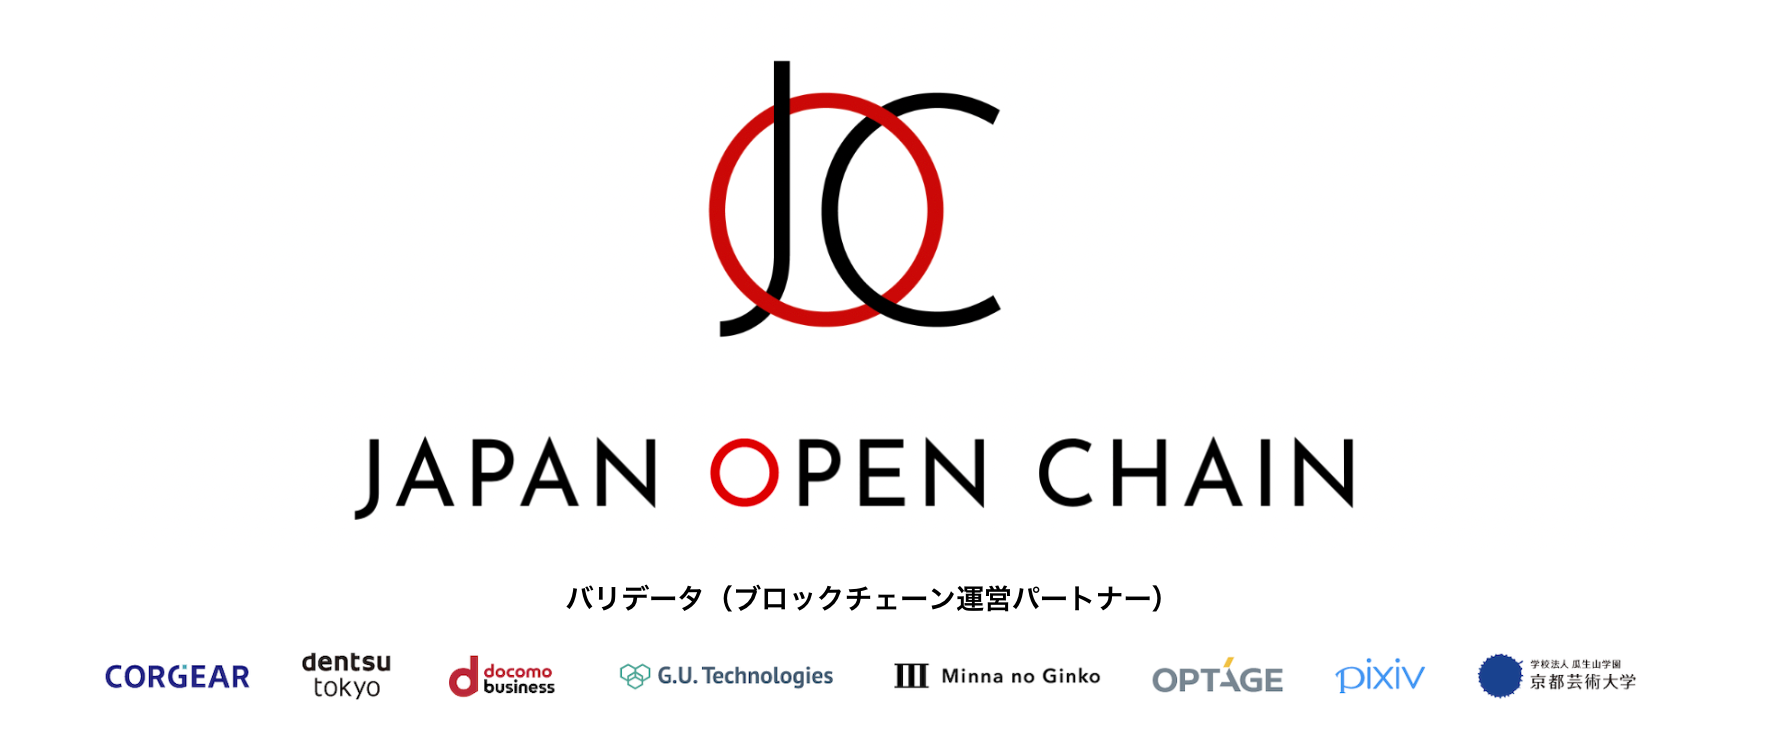 G.U.TechnologiesAJapan Open ChainŃIbNXsƓMv^̃Xe[uRCsɌ؎Jn